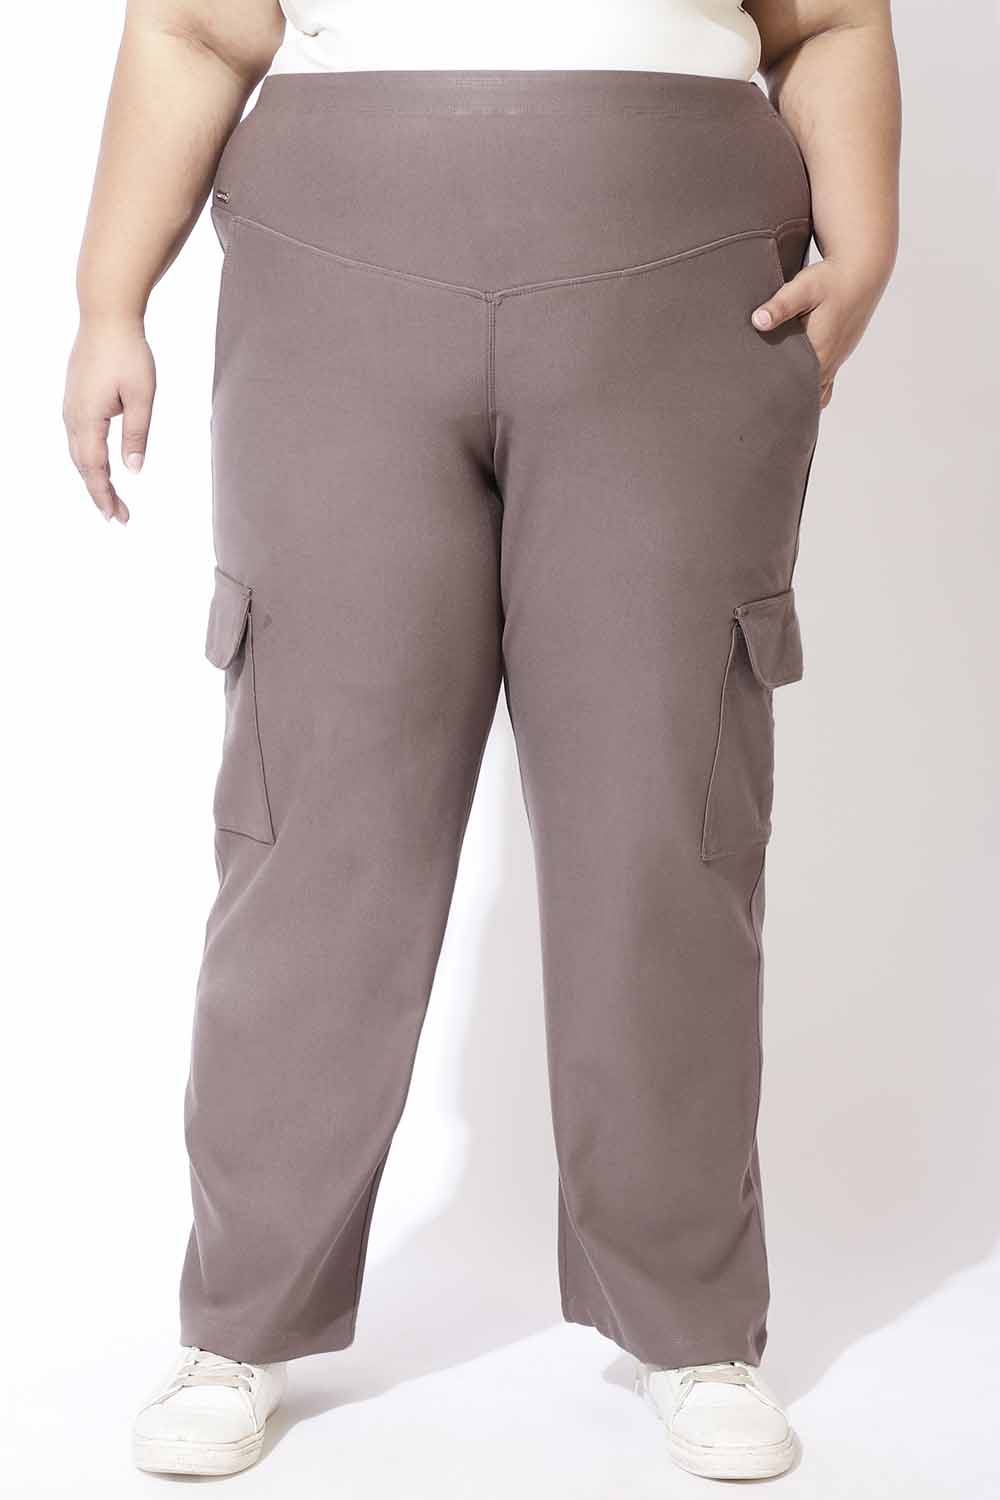 Plus-Size Cargo Pants Shopping Guide | Utility Pants to Shop